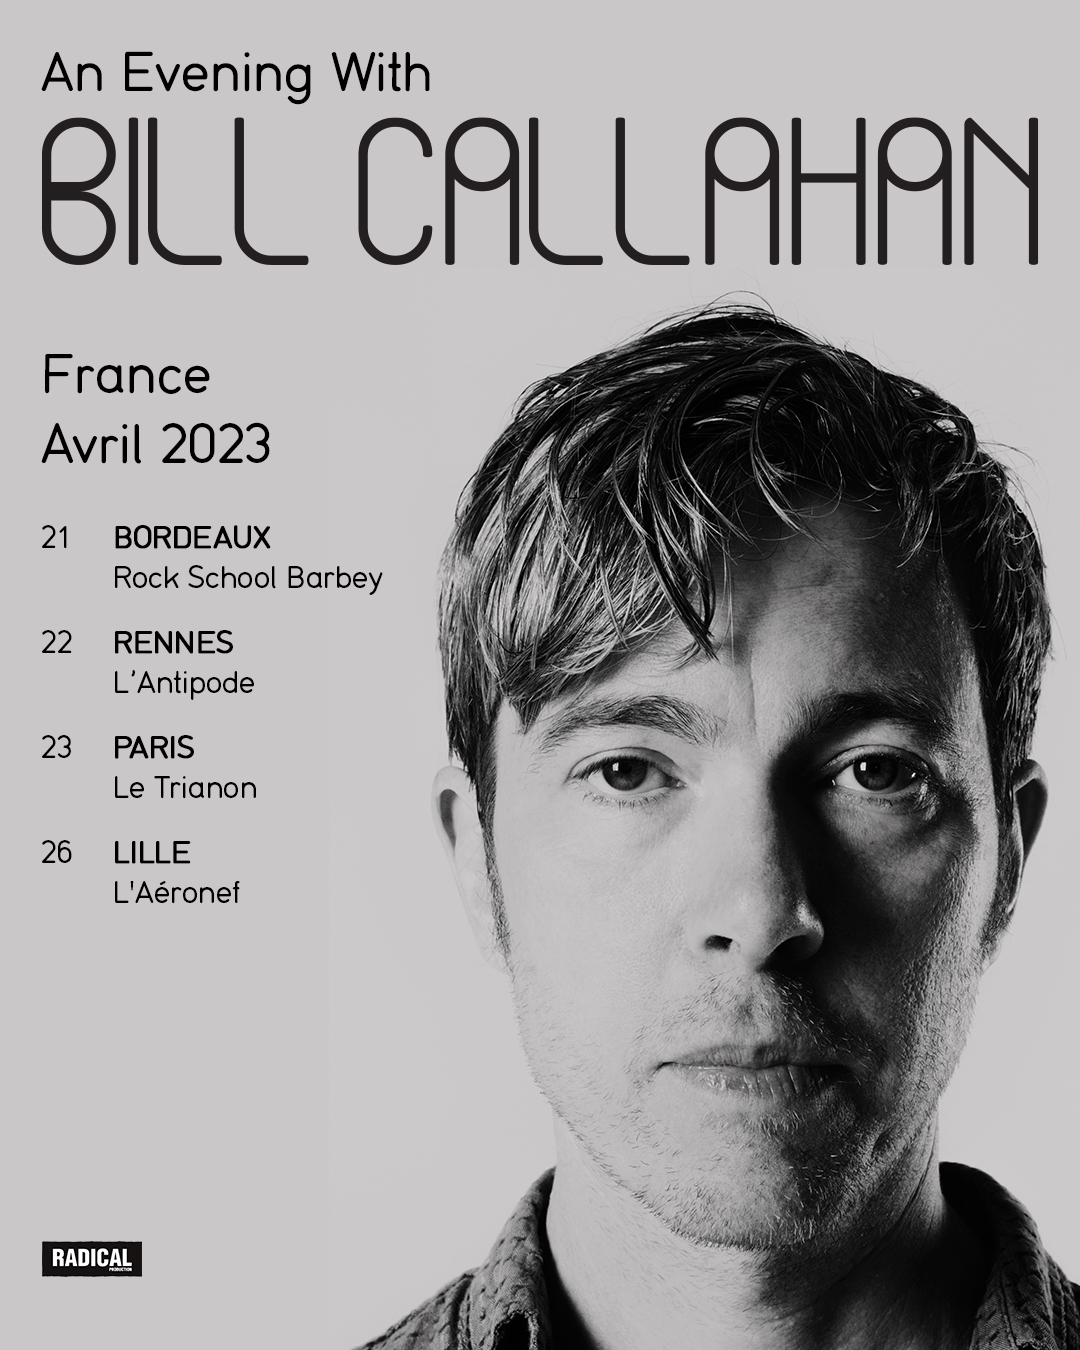 Bill Callahan France 2023